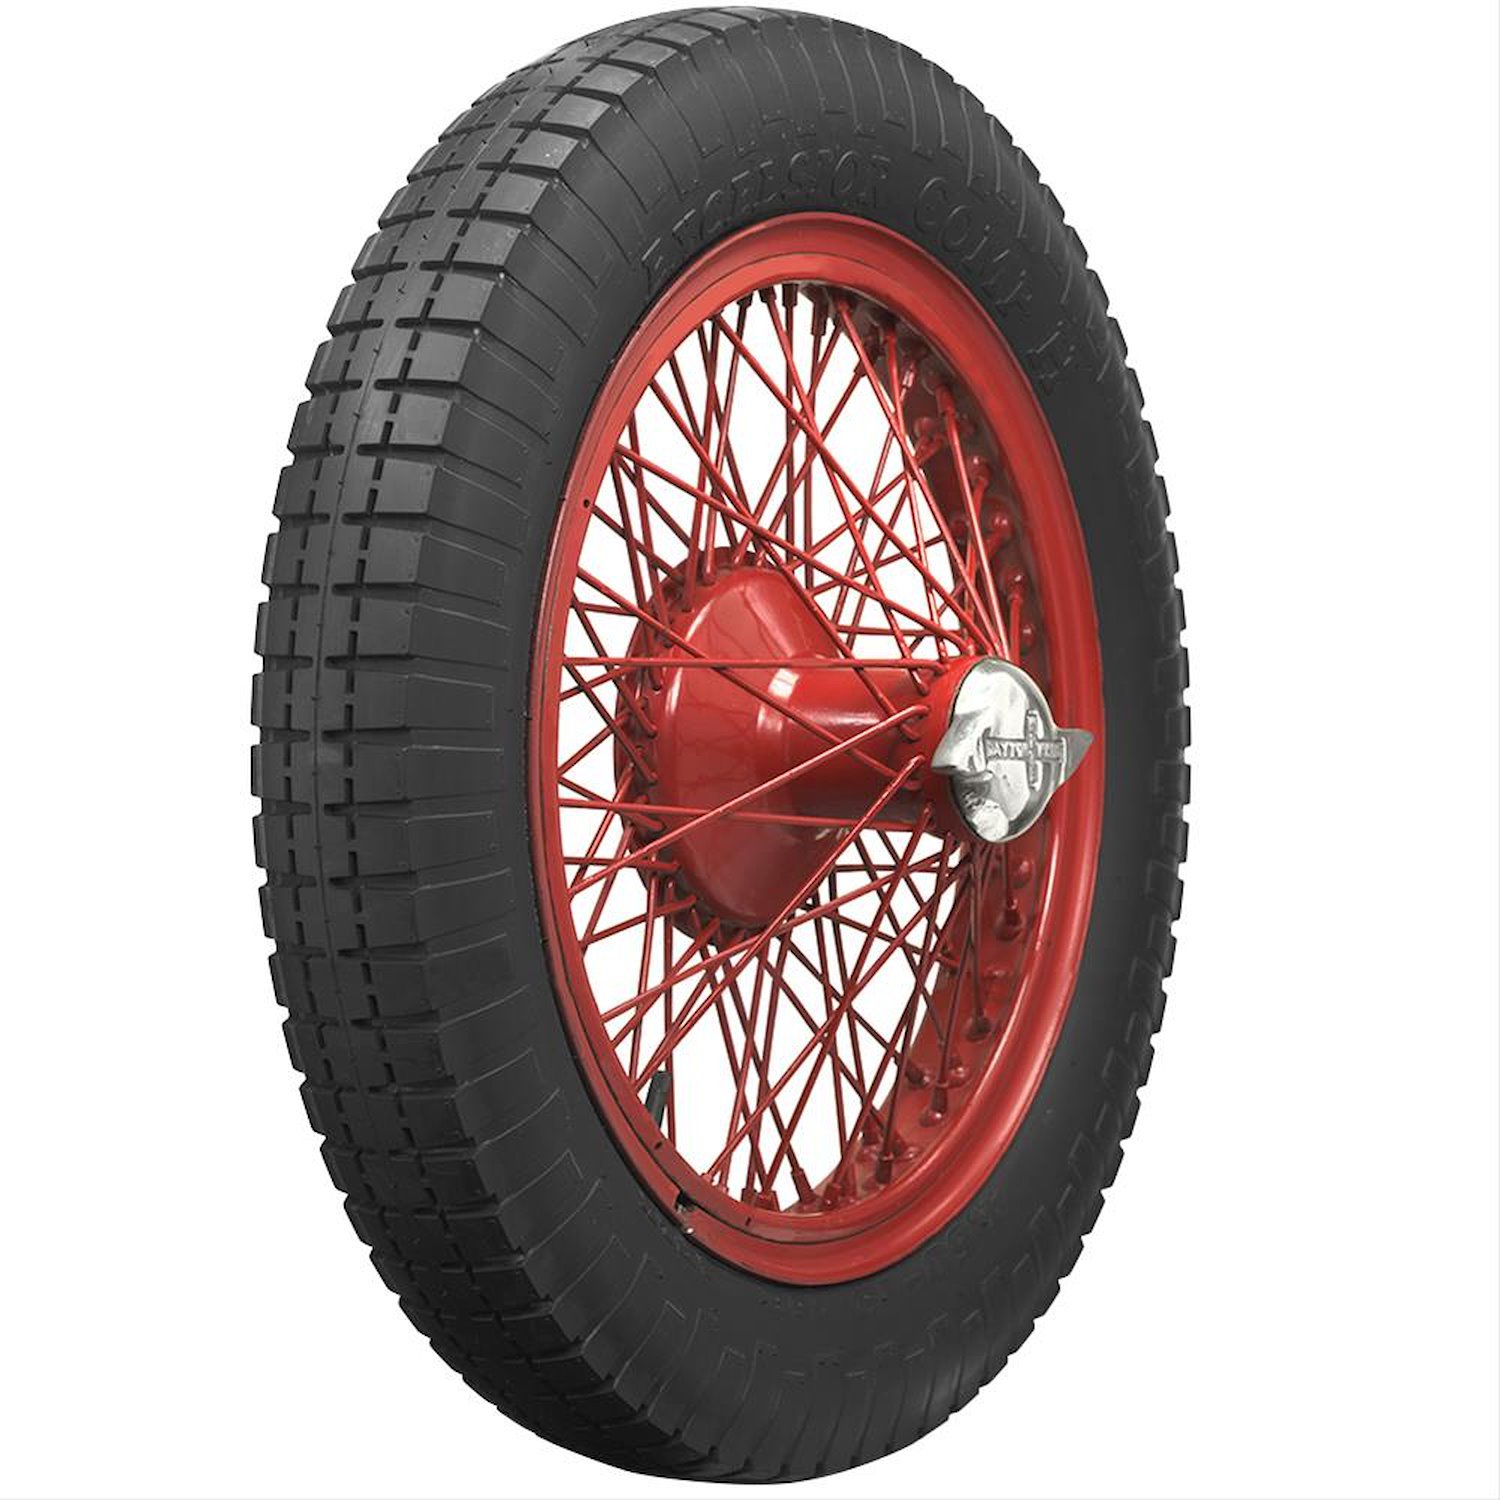 713854 Tire, Excelsior Comp H, 450/500-18